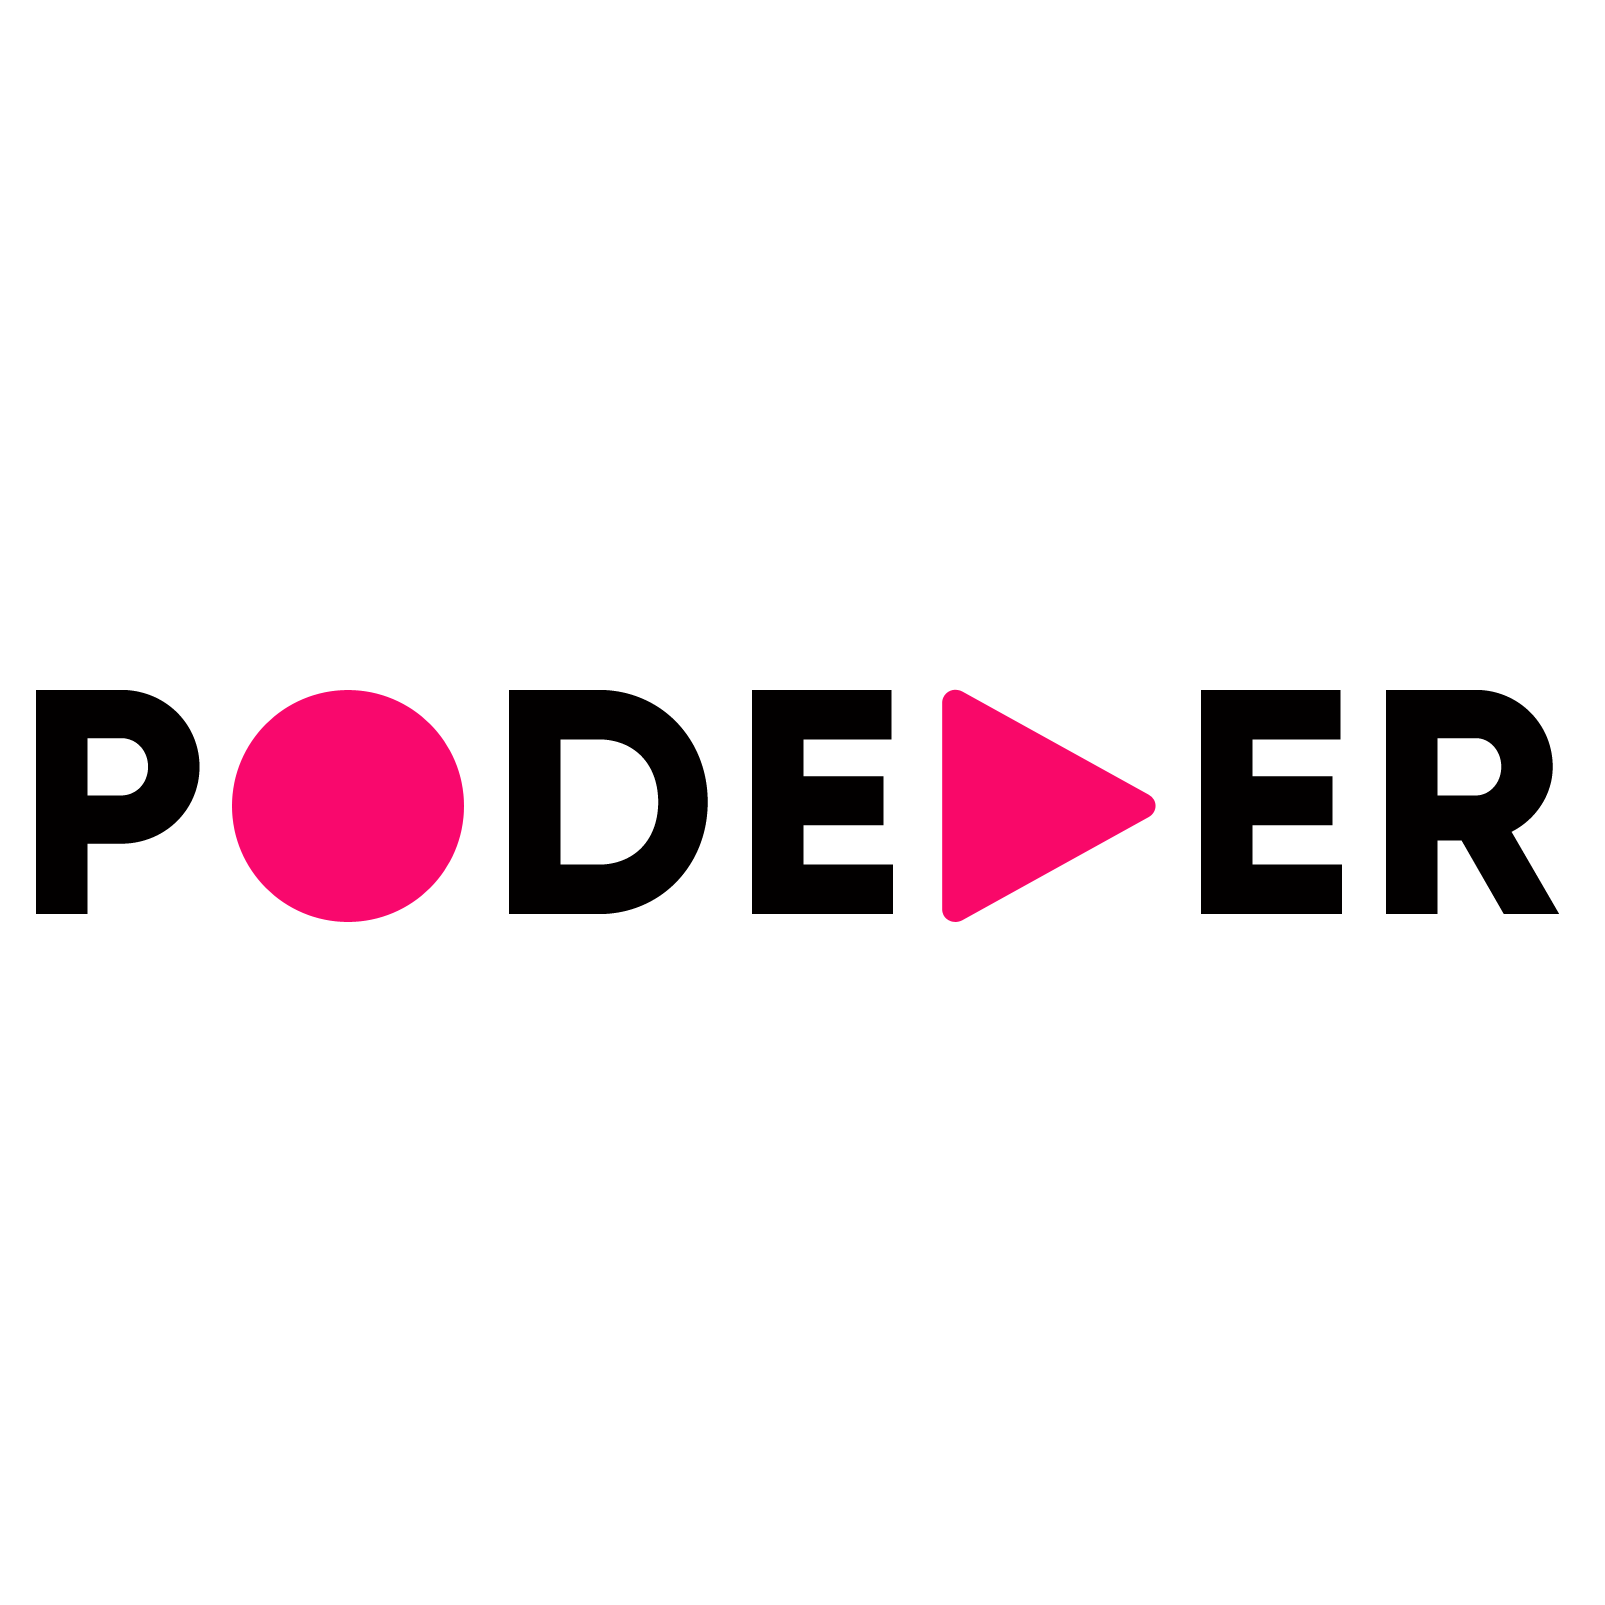 Podever - Podcast Produktion, Podcast Beratung, Podcast Werbung in Stuttgart - Logo